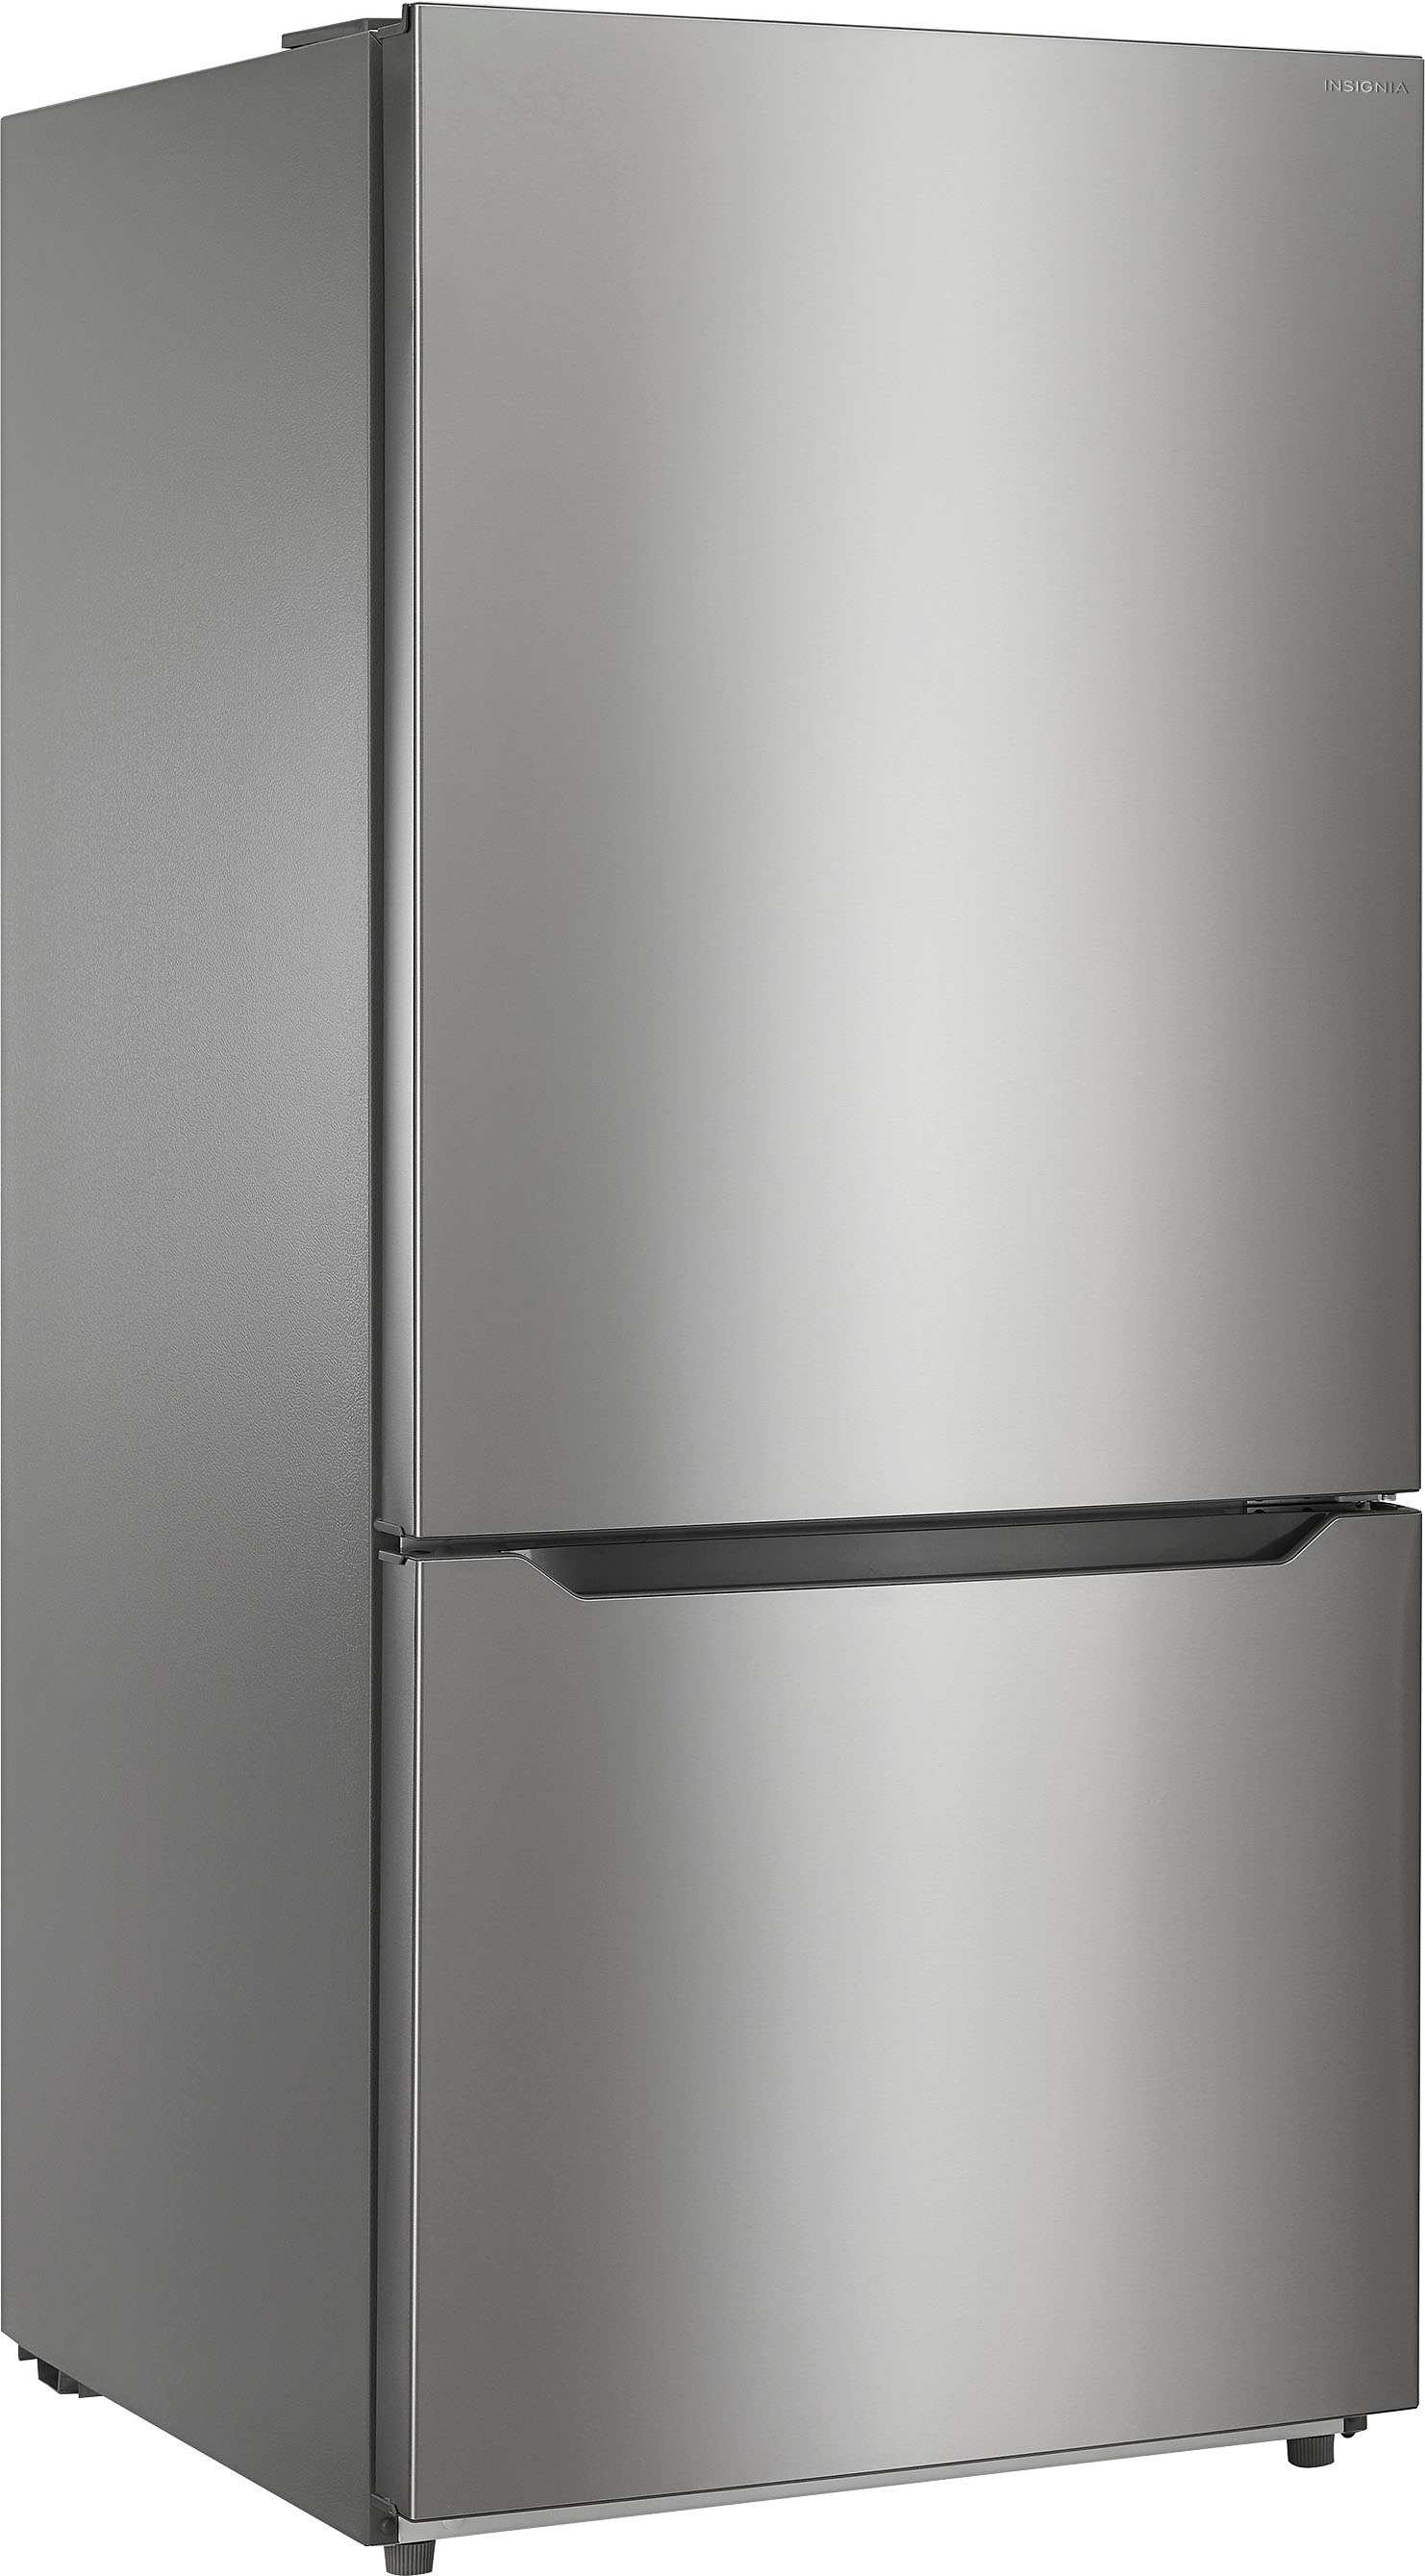 VÄLGRUNDAD Bottom-freezer refrigerator - Stainless steel - IKEA